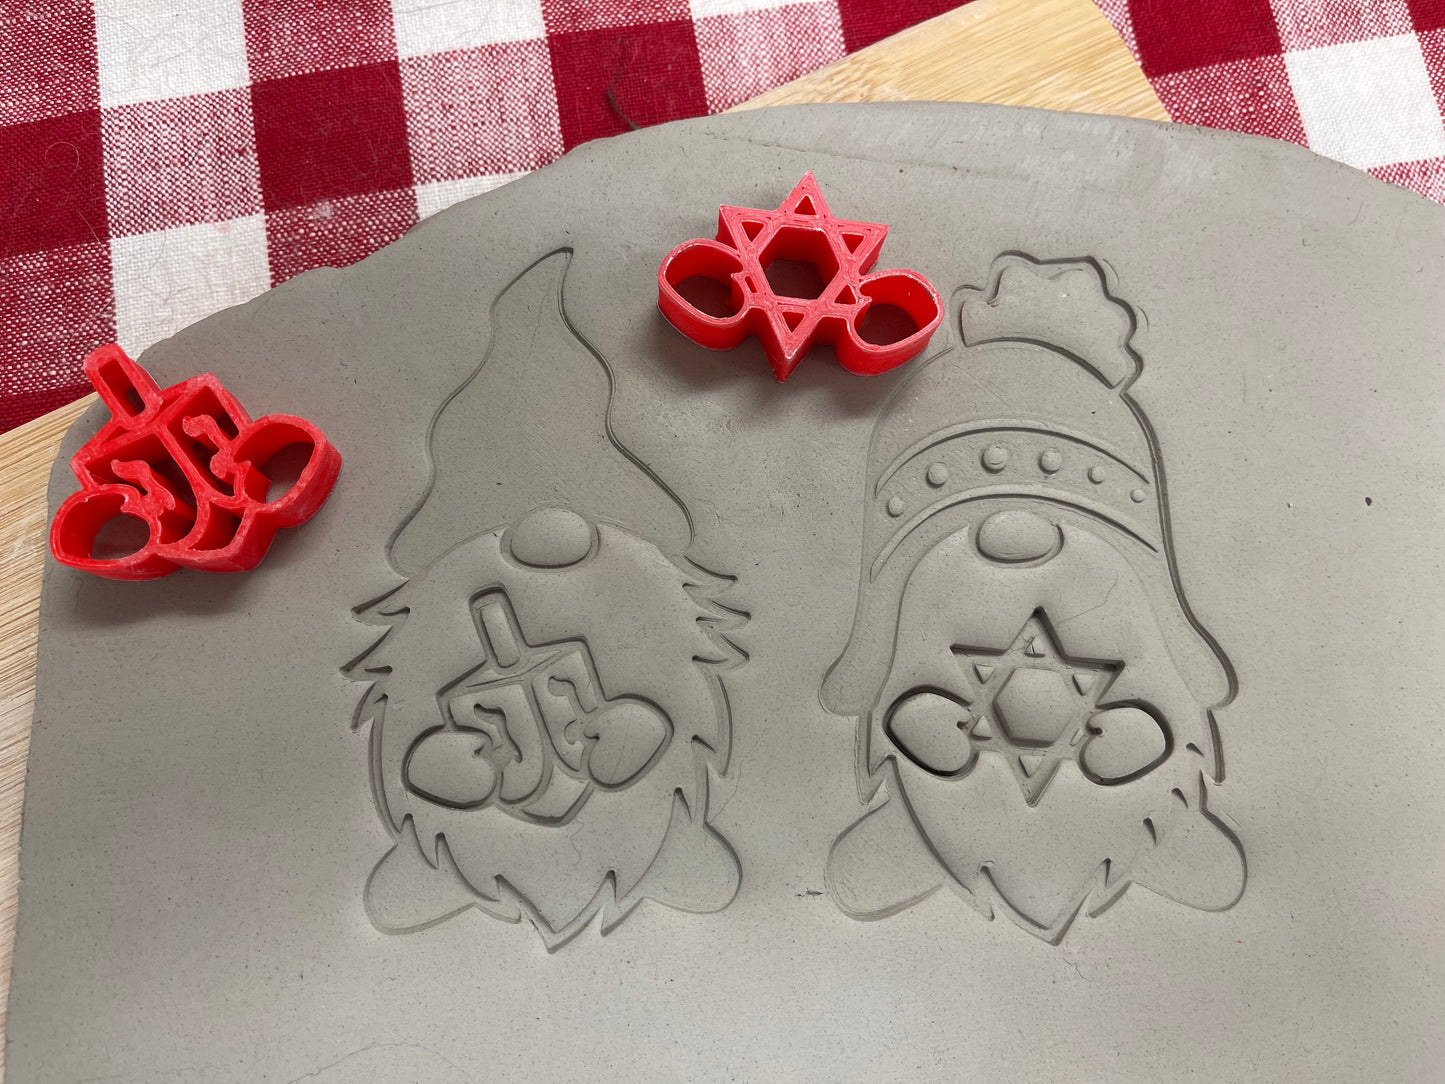 Gnome hands extras stamps, Hanukkah designs - plastic 3D printed, multiple sizes